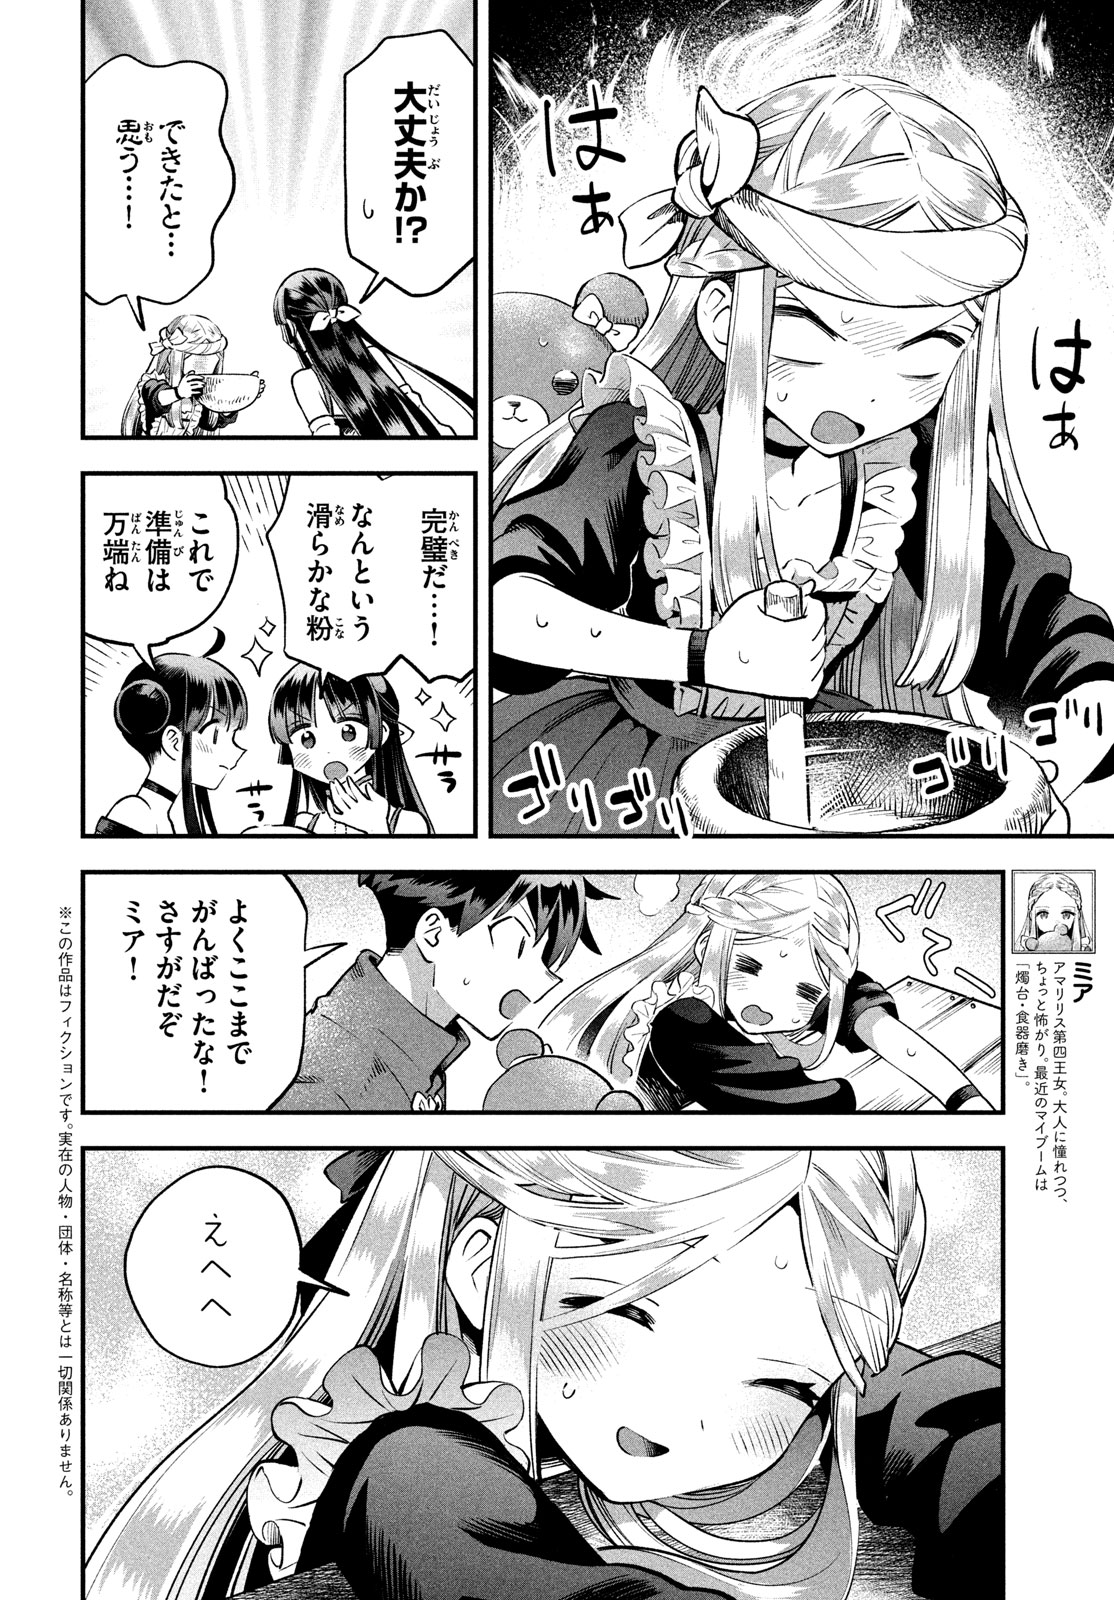 7-nin no Nemuri Hime - Chapter 46 - Page 2